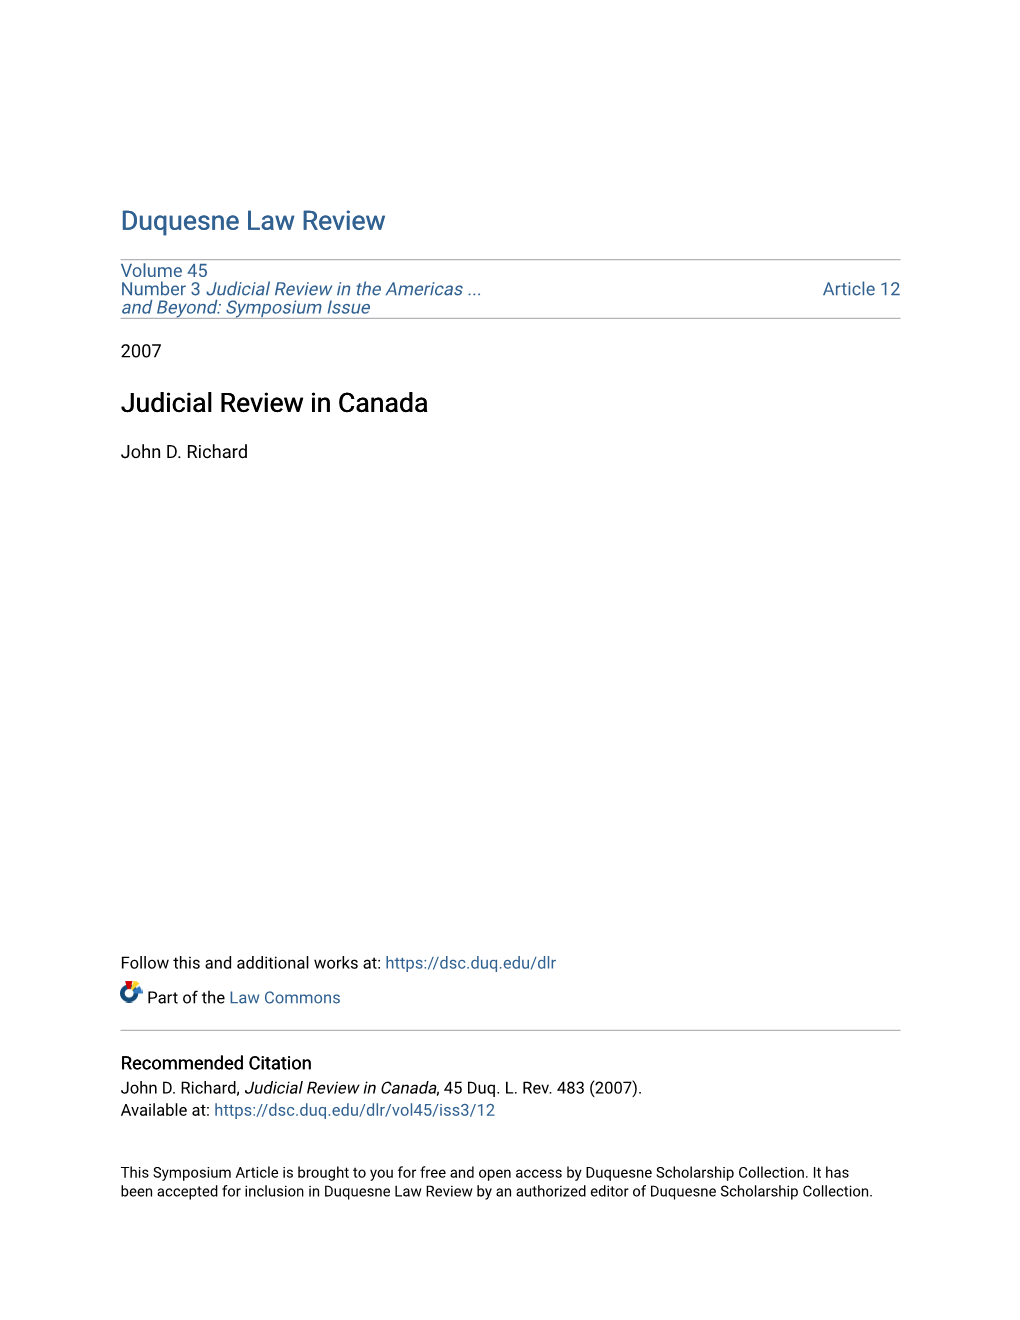 Judicial Review in Canada